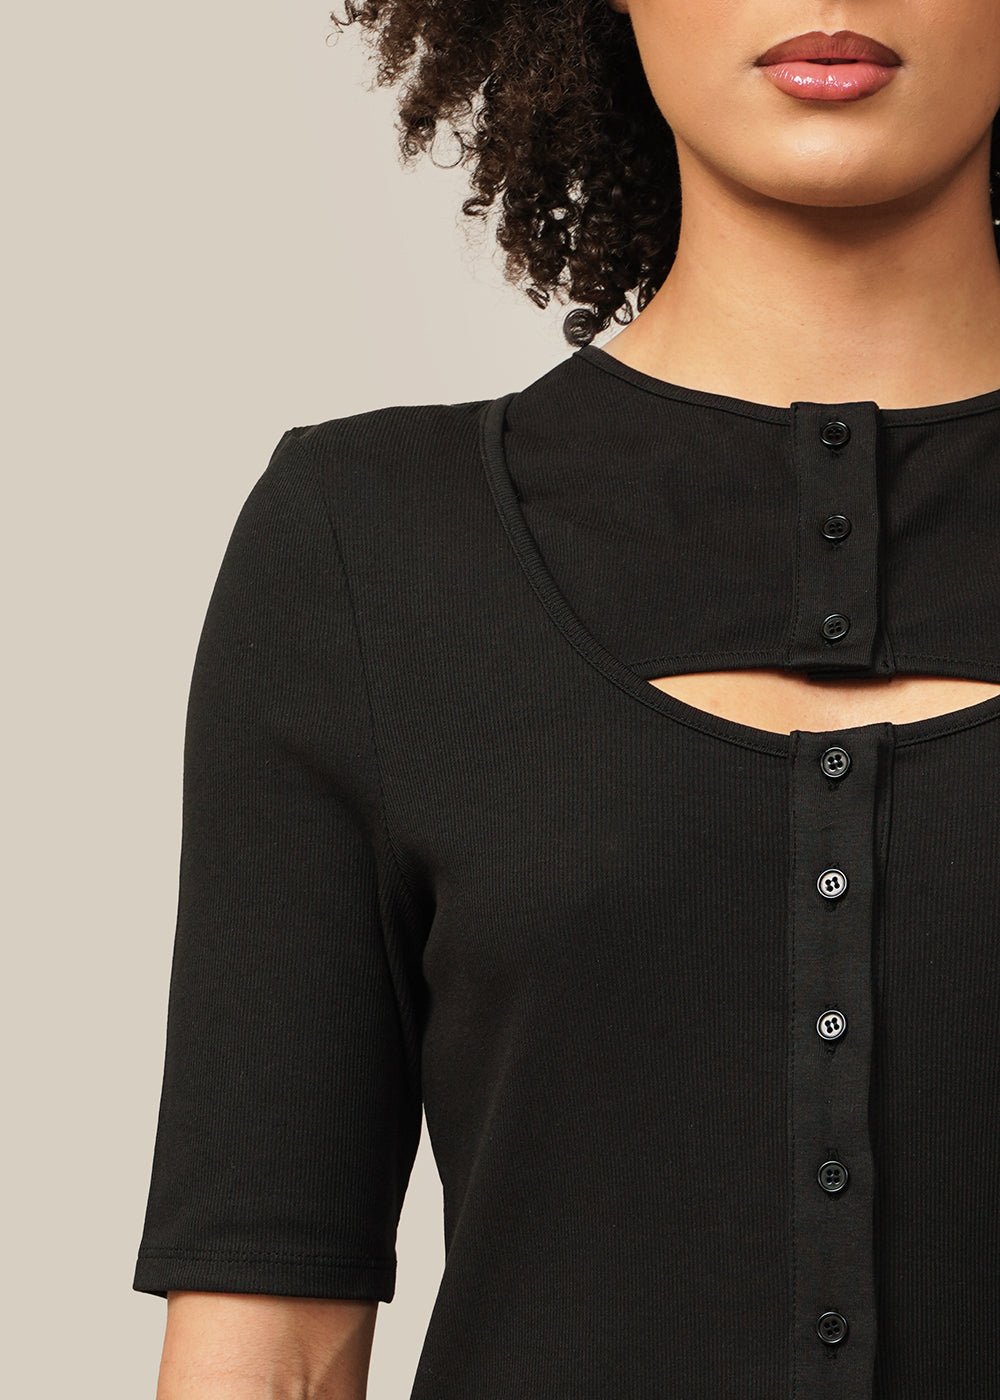 AMOMENTO Black Ribbed Button Cardigan Set - New Classics Studios Sustainable Ethical Fashion Canada